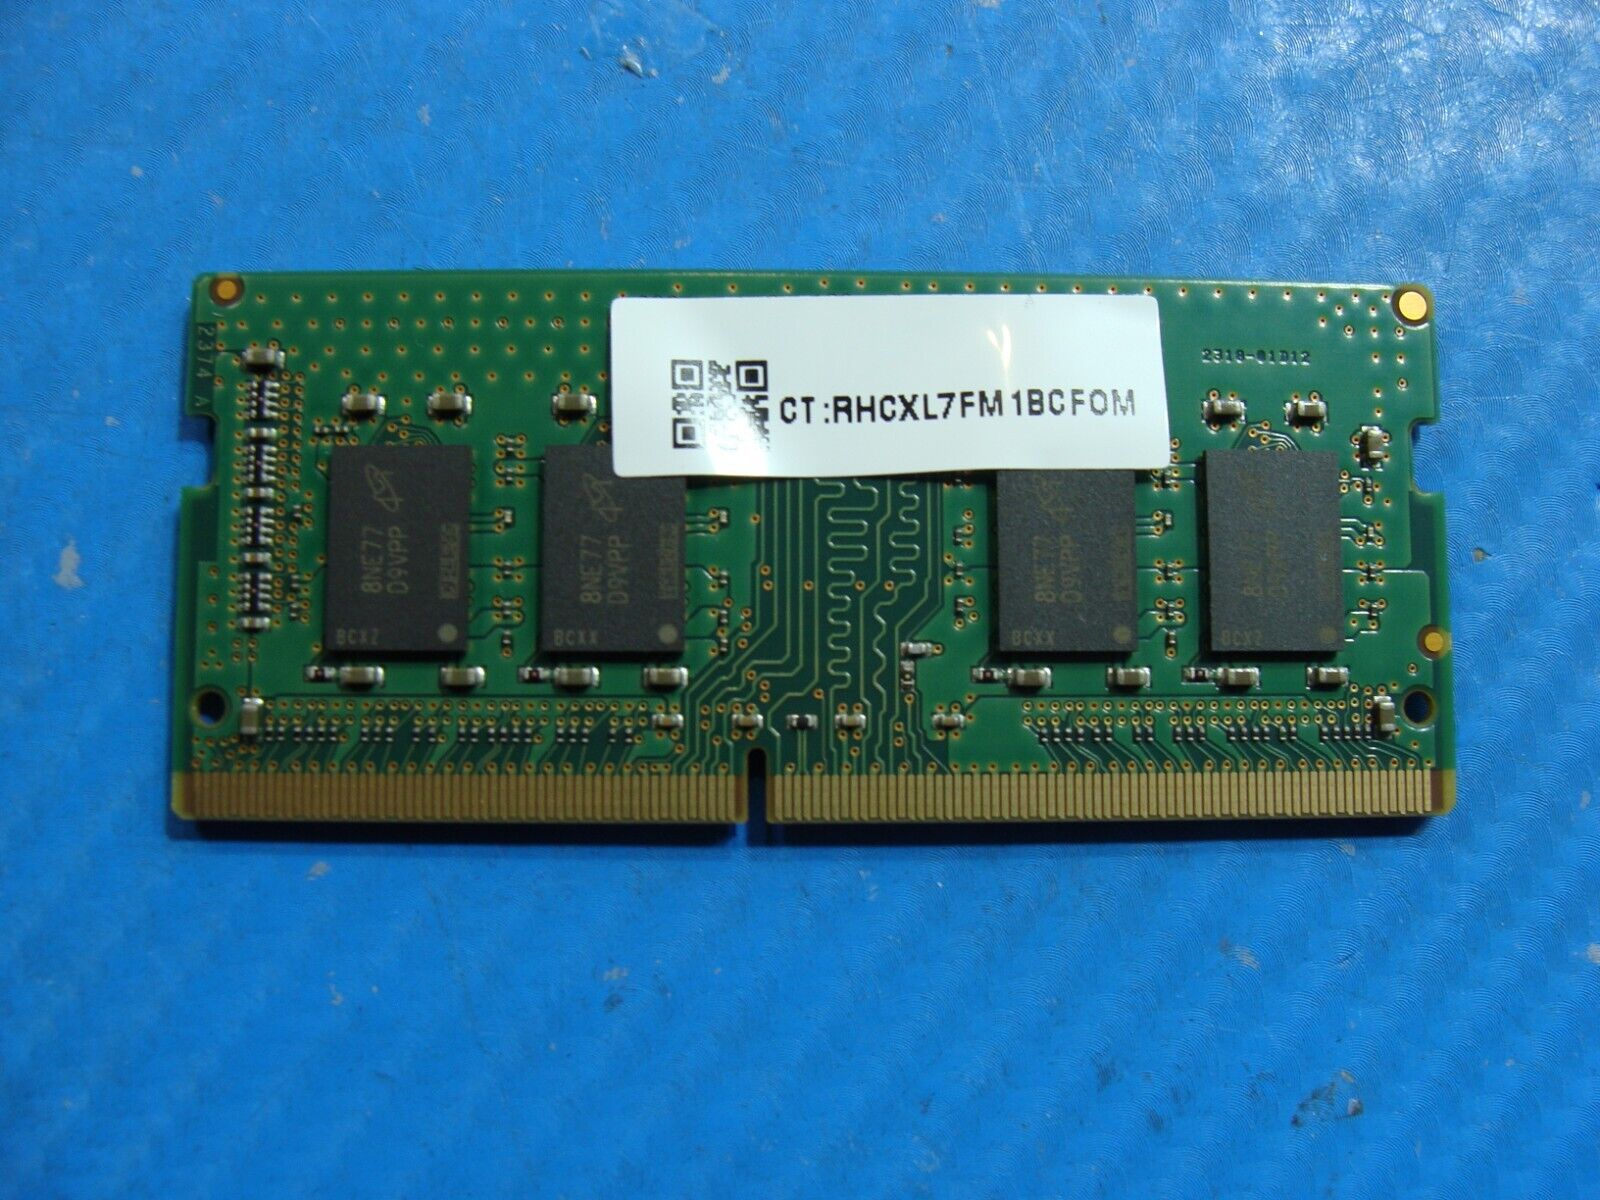 HP 450 G5 Micron 8GB 1Rx8 PC4-2666V Memory RAM SO-DIMM MTA8ATF1G64HZ-2G6E1